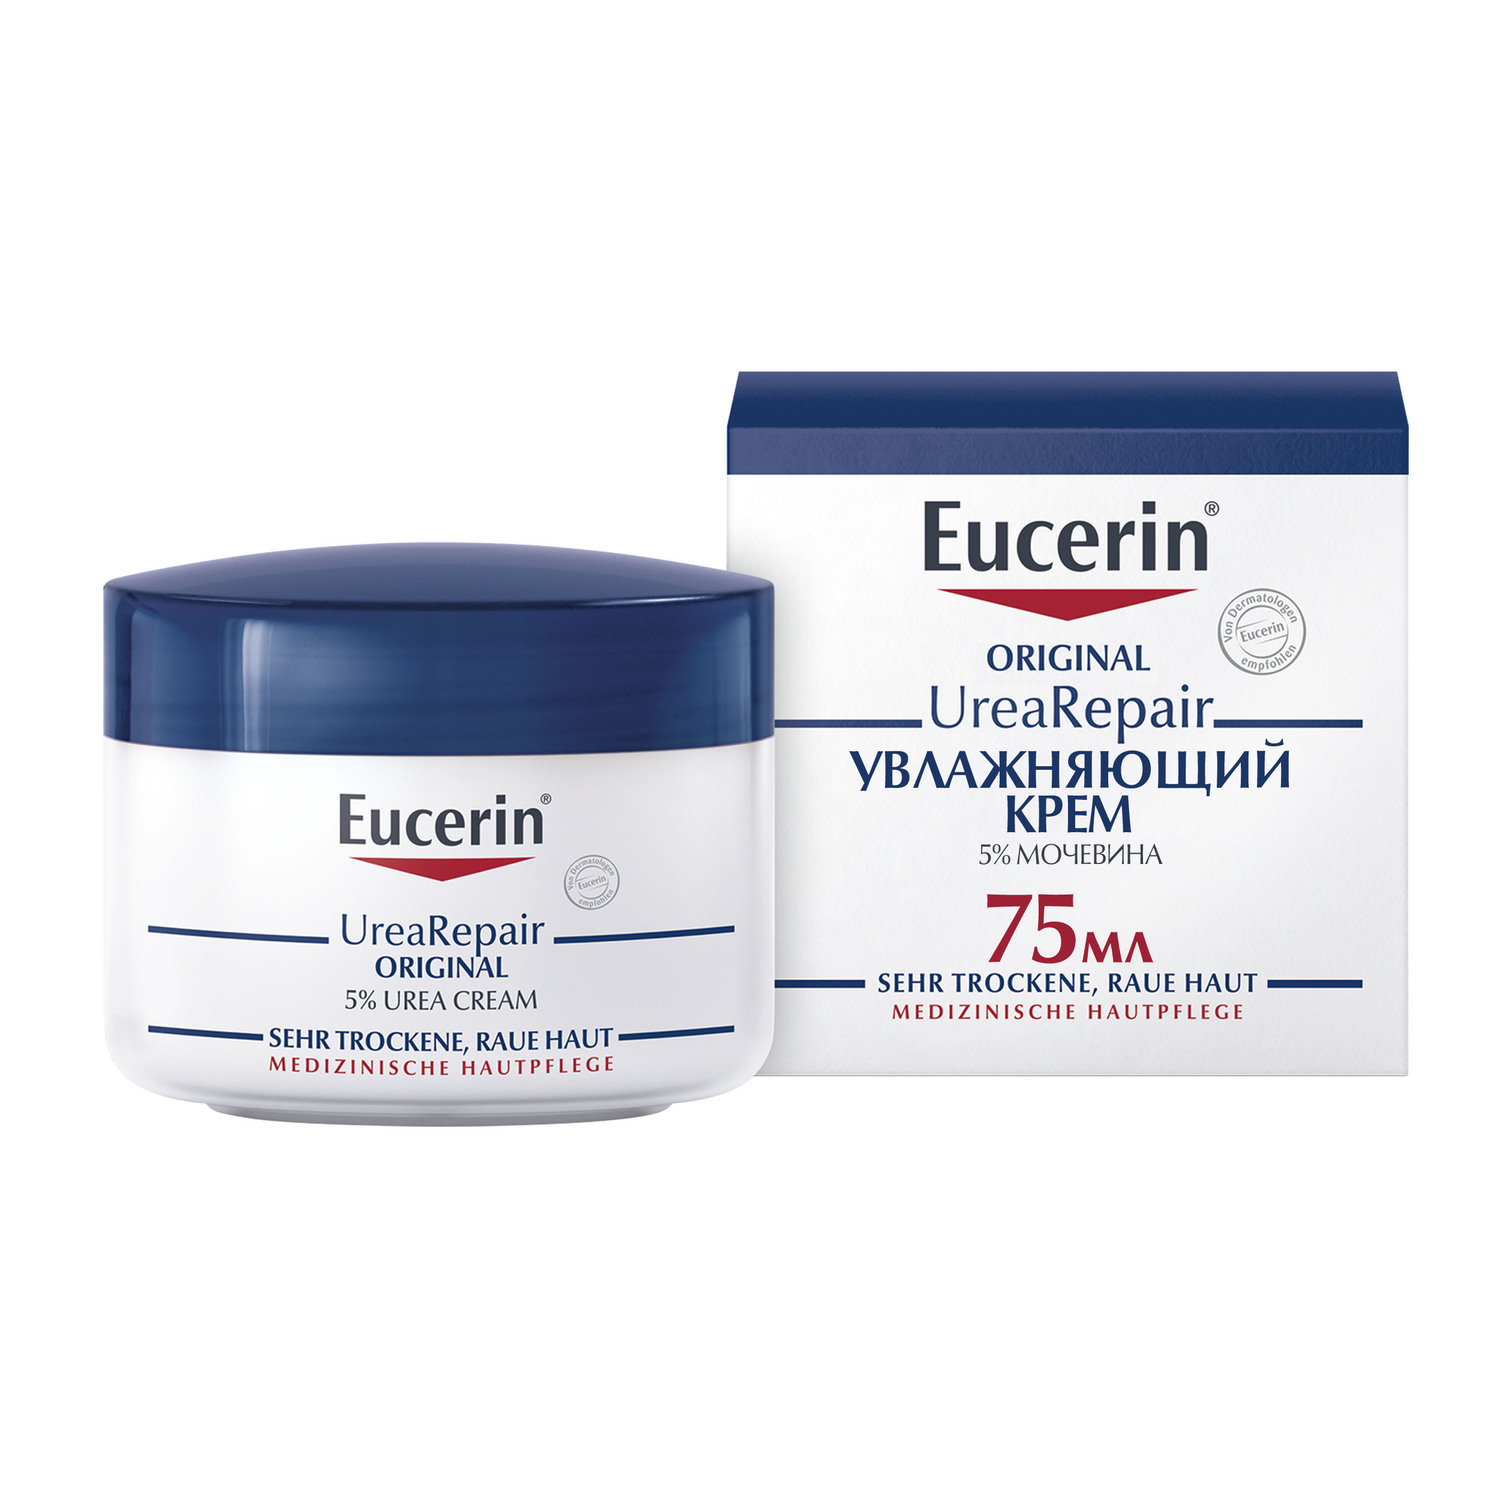 Eucerin Увлажняющий крем с 5% мочевиной, 75 мл (Eucerin, UreaRepair) увлажняющий крем для рук eucerin urearepair 75 мл